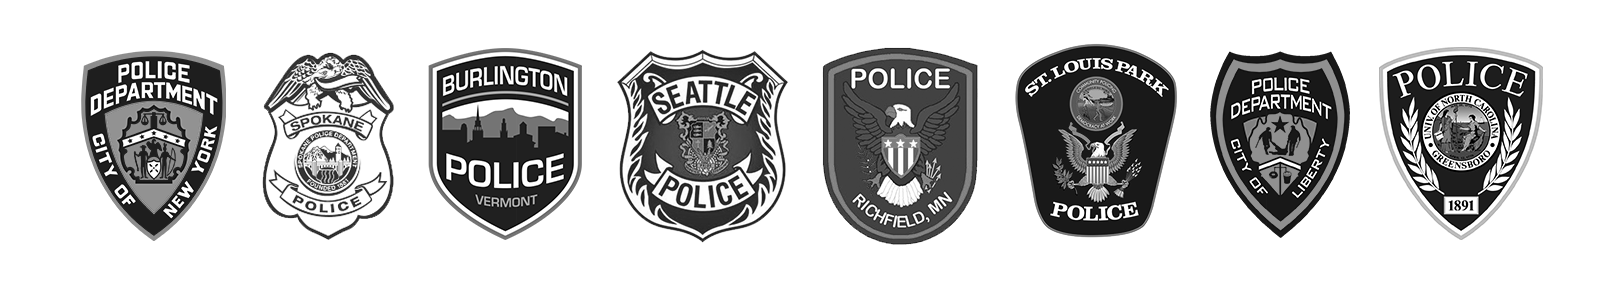 police-logos-for-custom-challenge-coin-ideas